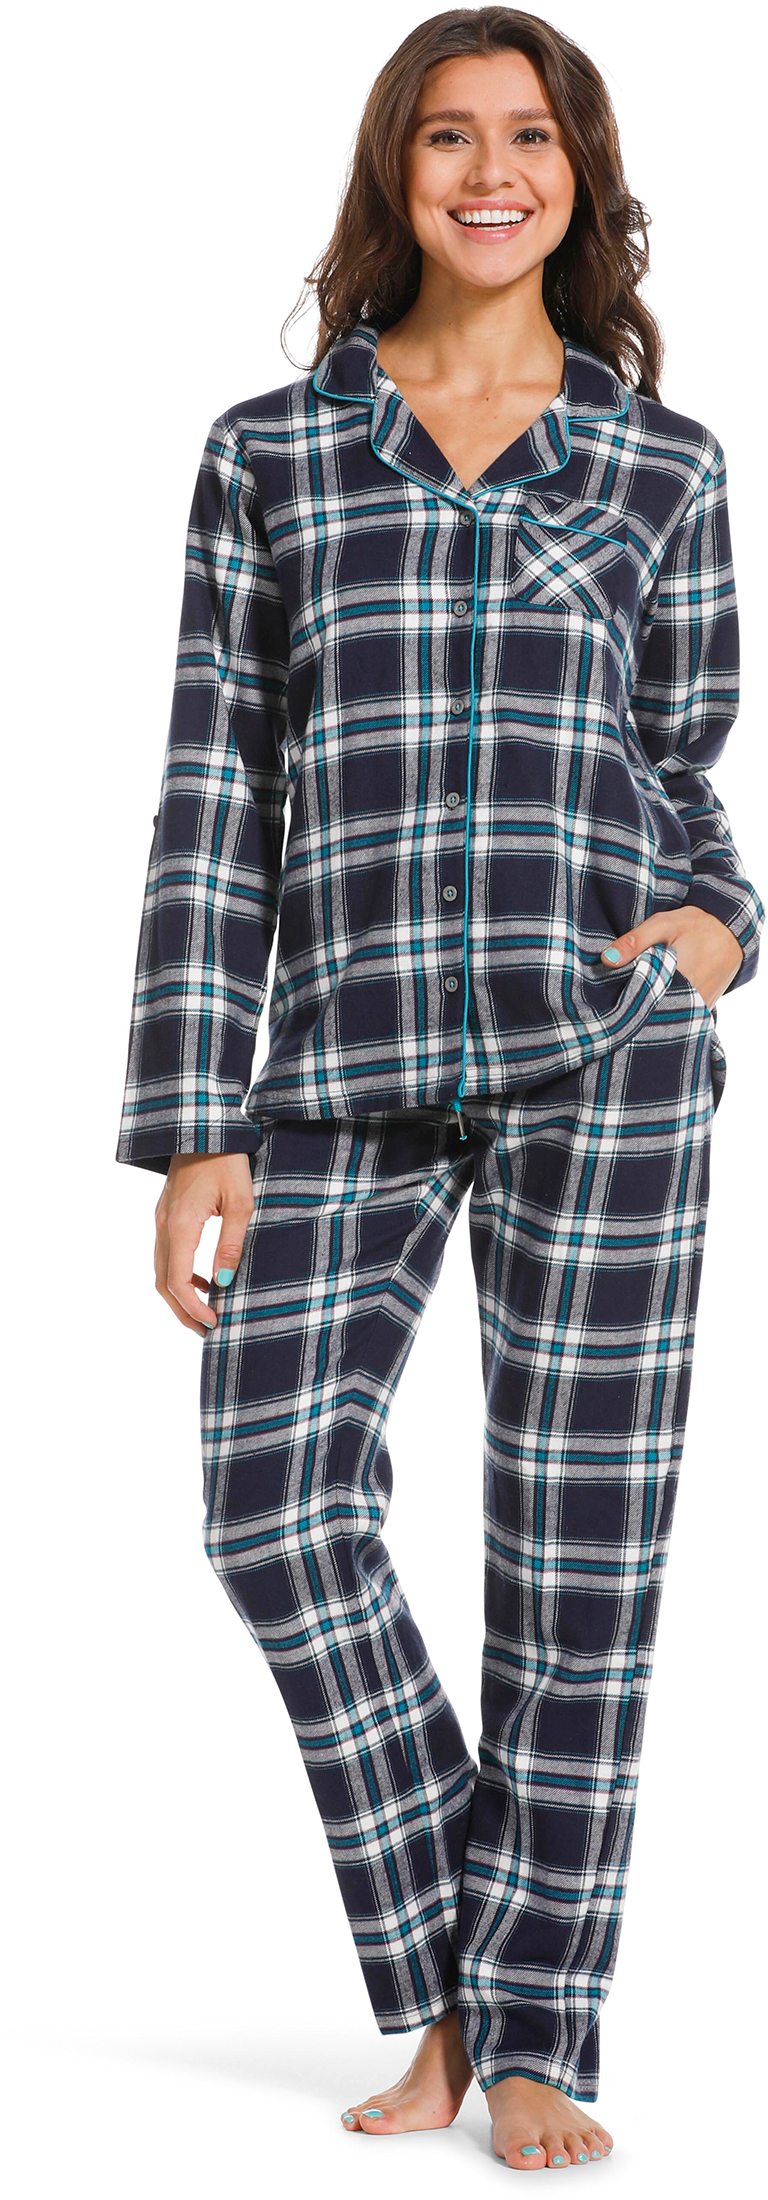 Rebelle dames pyjama flanel 21222-408-6 - Blauw - 38